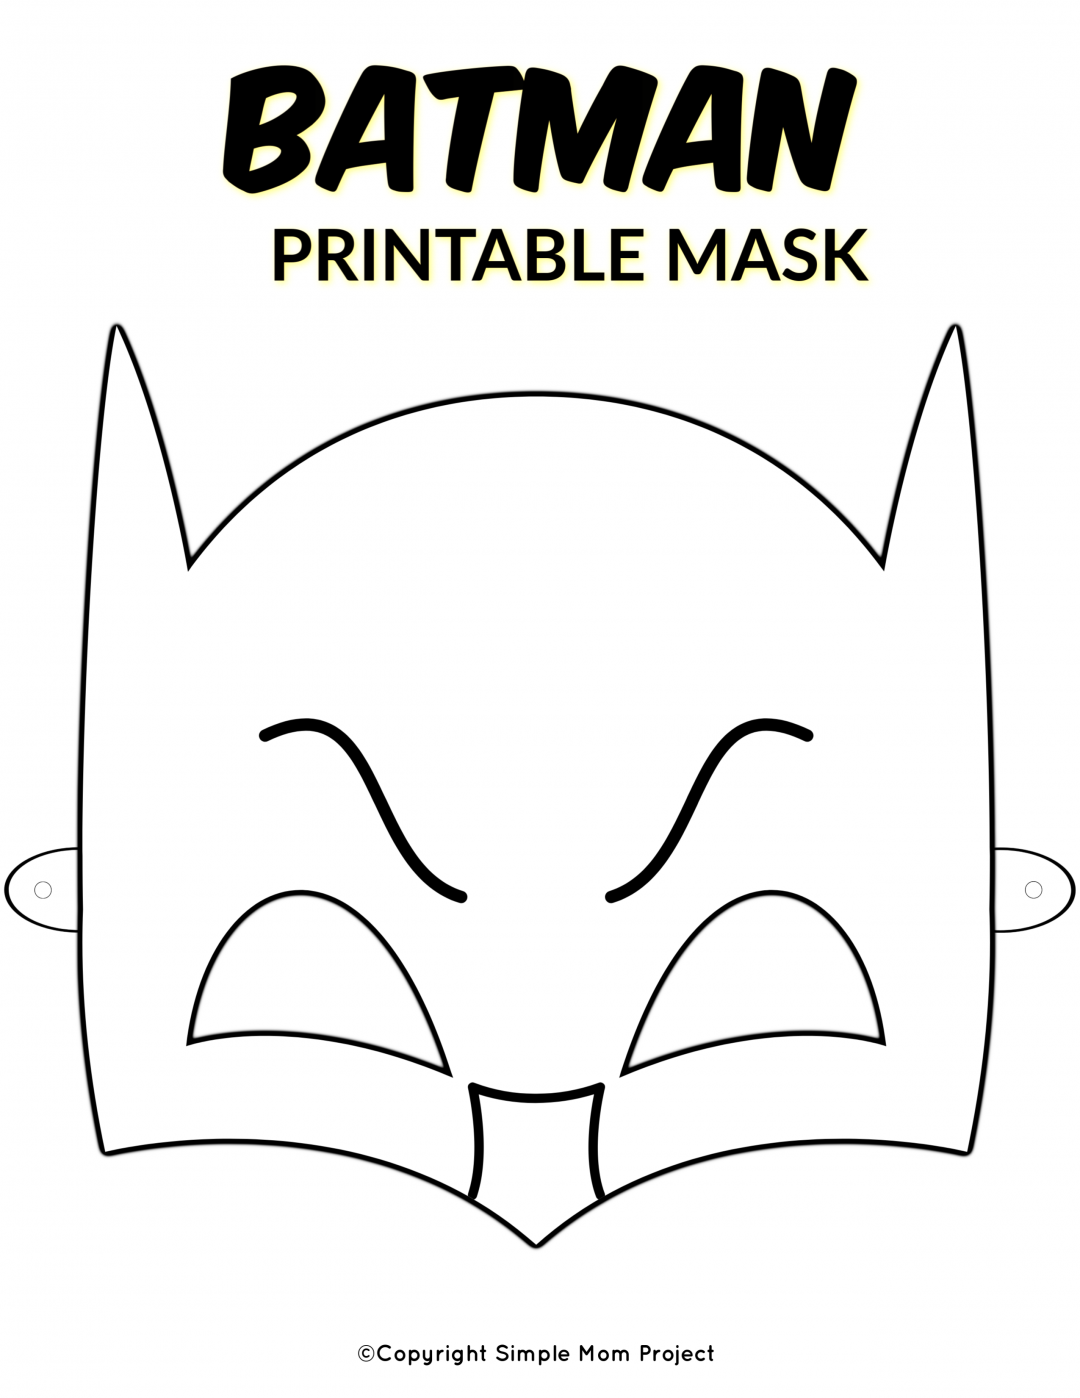 Pin On Mask